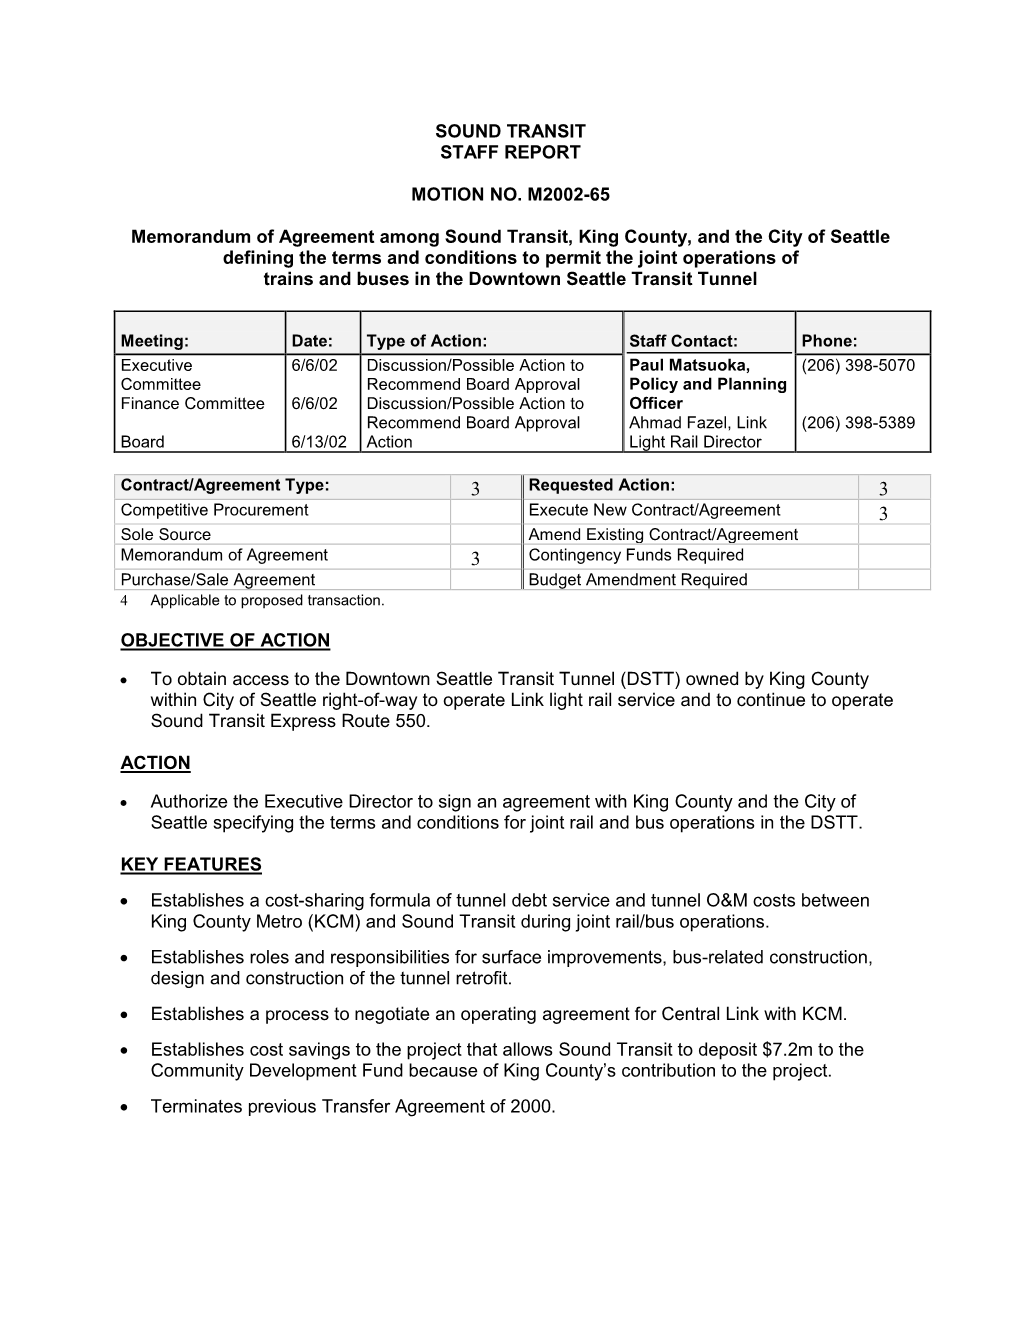 Sound Transit Staff Report Motion No. M2002-65